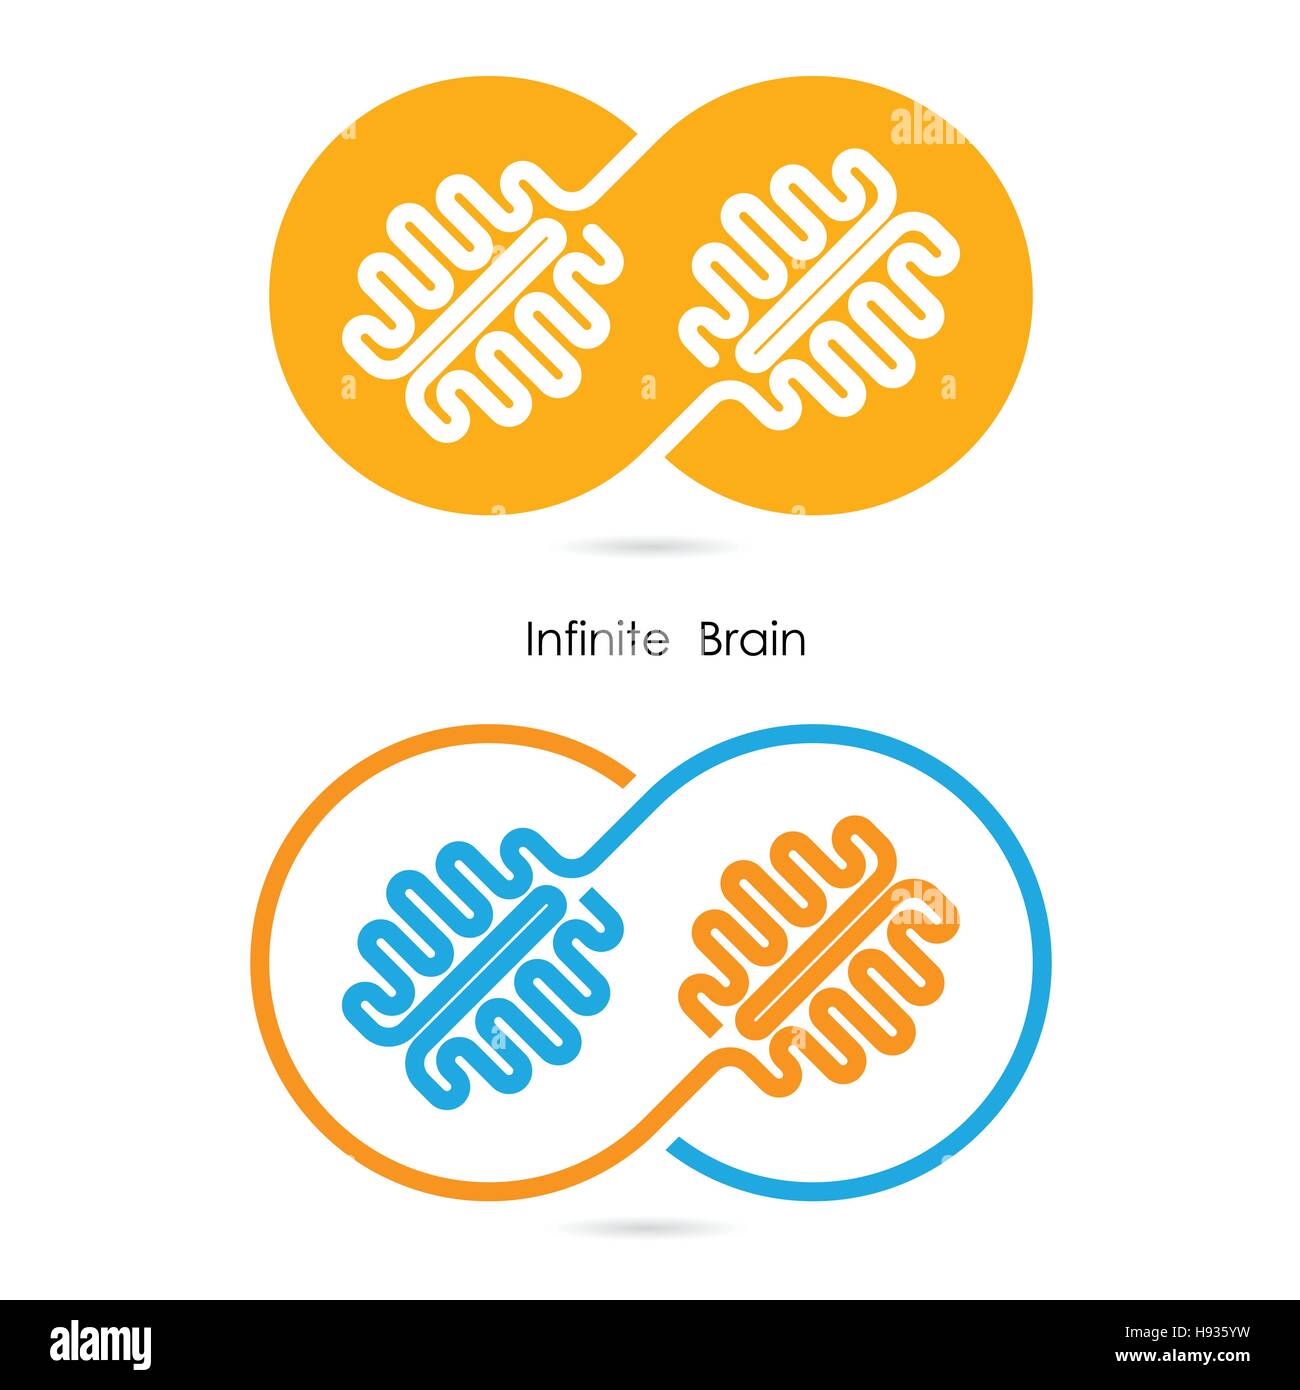 Creative brain sign and infinite creativity logo elements design.Infinite ideas concept.Business and education creative logotype symbol. Stock Vector